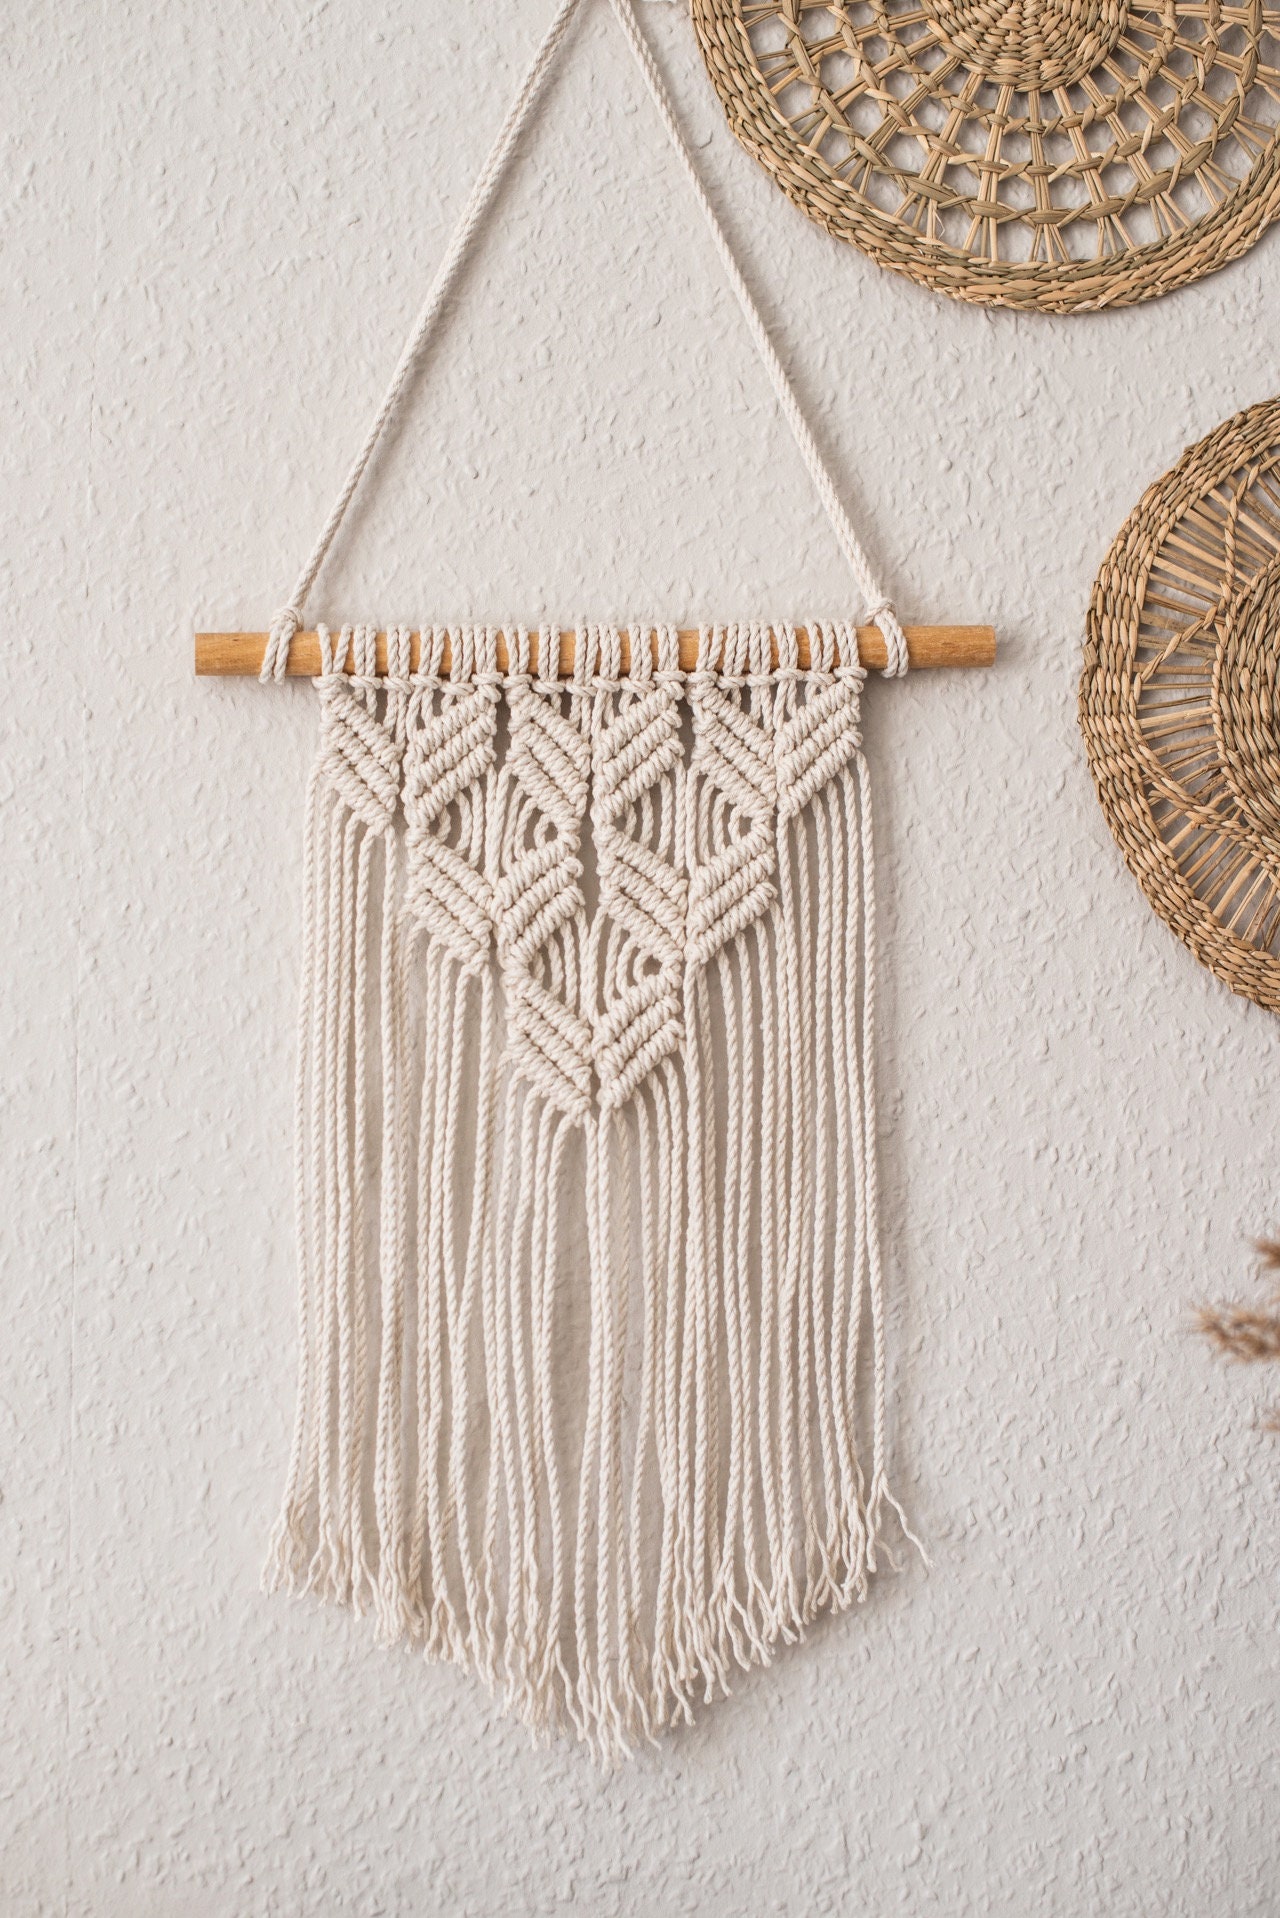 WEBEEDY 4 Sets Macrame Wall Hanger Kits for Adults Beginners, DIY Mini  Macrame Wall Hanging Decor, Boho Woven Tapestry Tassel Wall Hanging for  Room